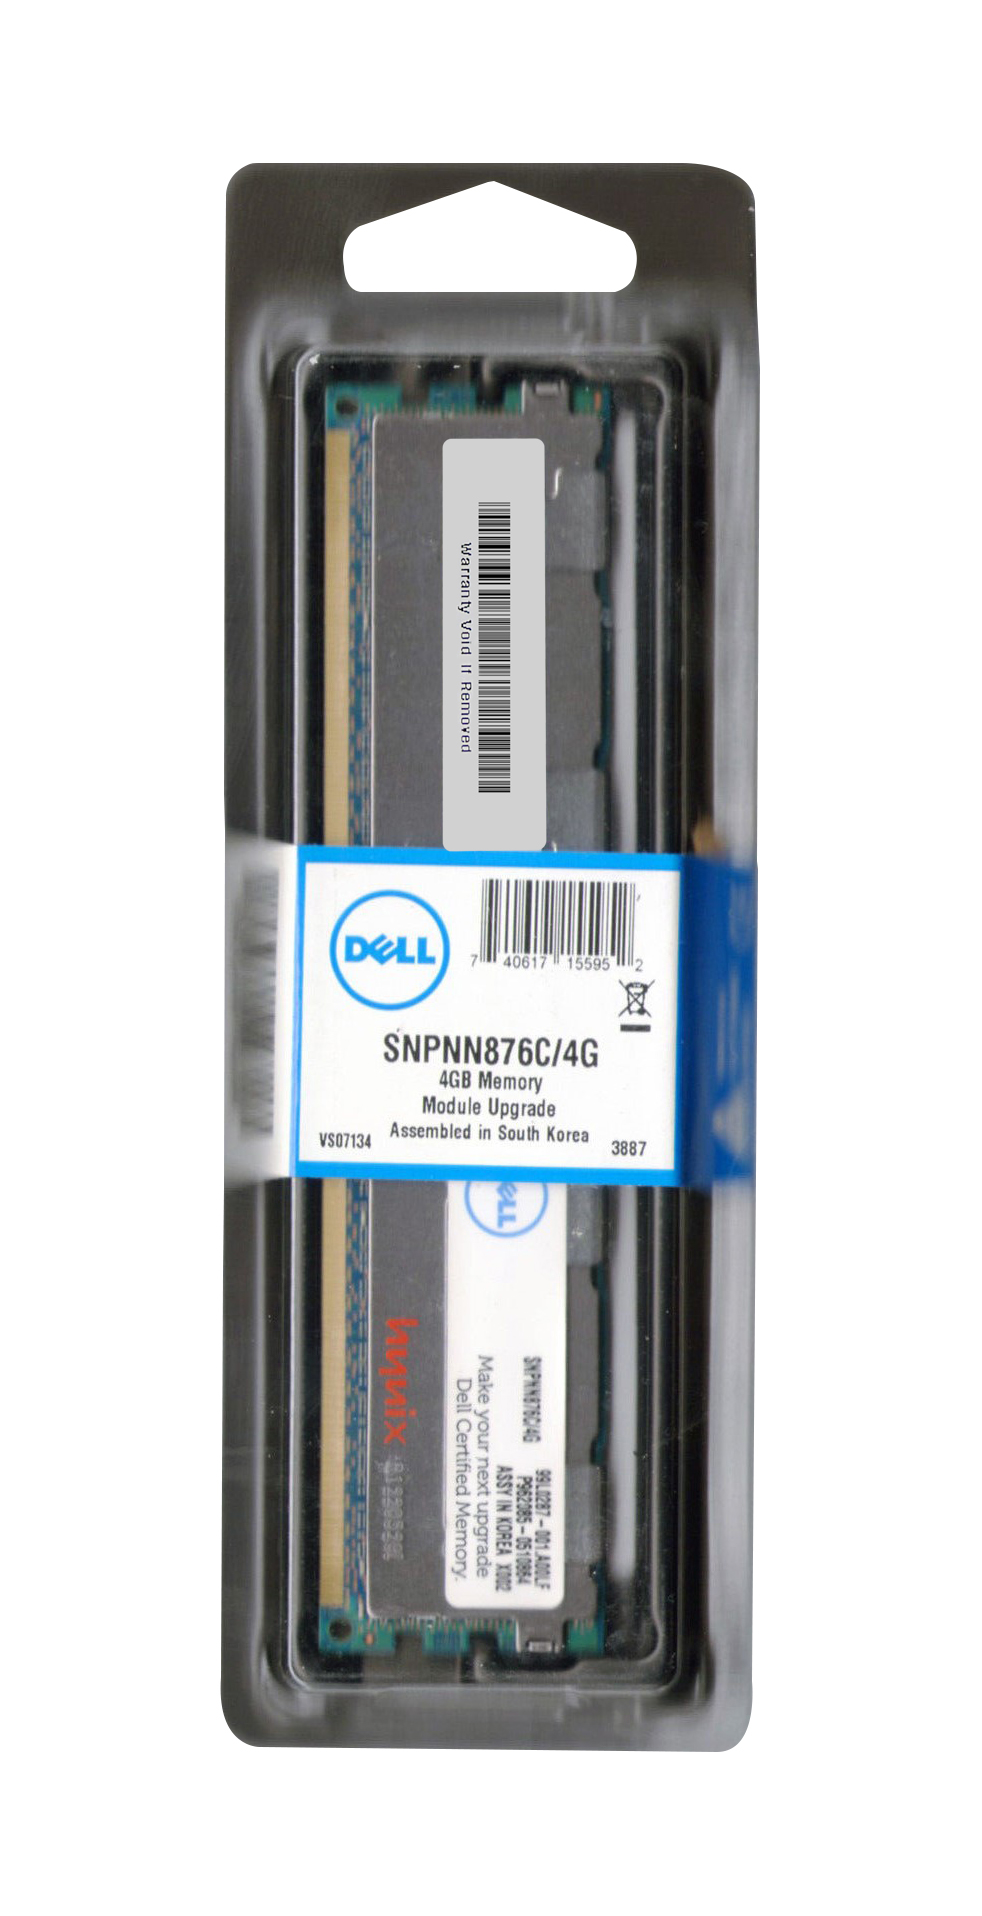 SNPNN876C/4G Dell 4GB PC3-10600 DDR3-1333MHz ECC Registered CL9 240-Pin DIMM Dual Rank Memory Module for PowerEdge Servers